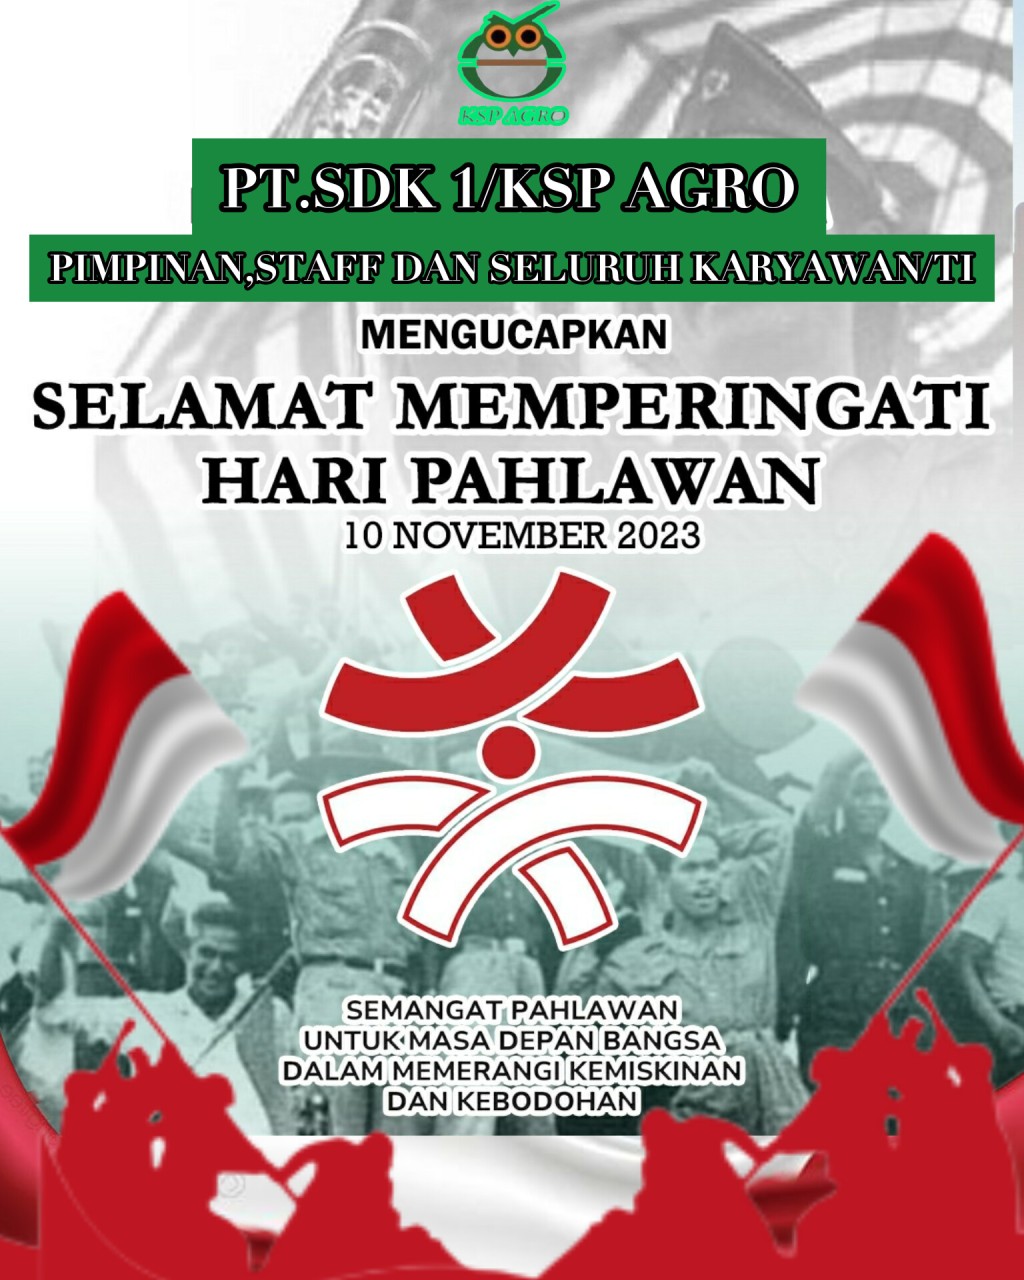 PT.SDK 1 /KSP AGRO BESERTA SELURUH UNSUR PIMPINAN,STAFF DAN KARYAWAN/TI Mengucapkan Selamat memperingati Hari Pahlawan